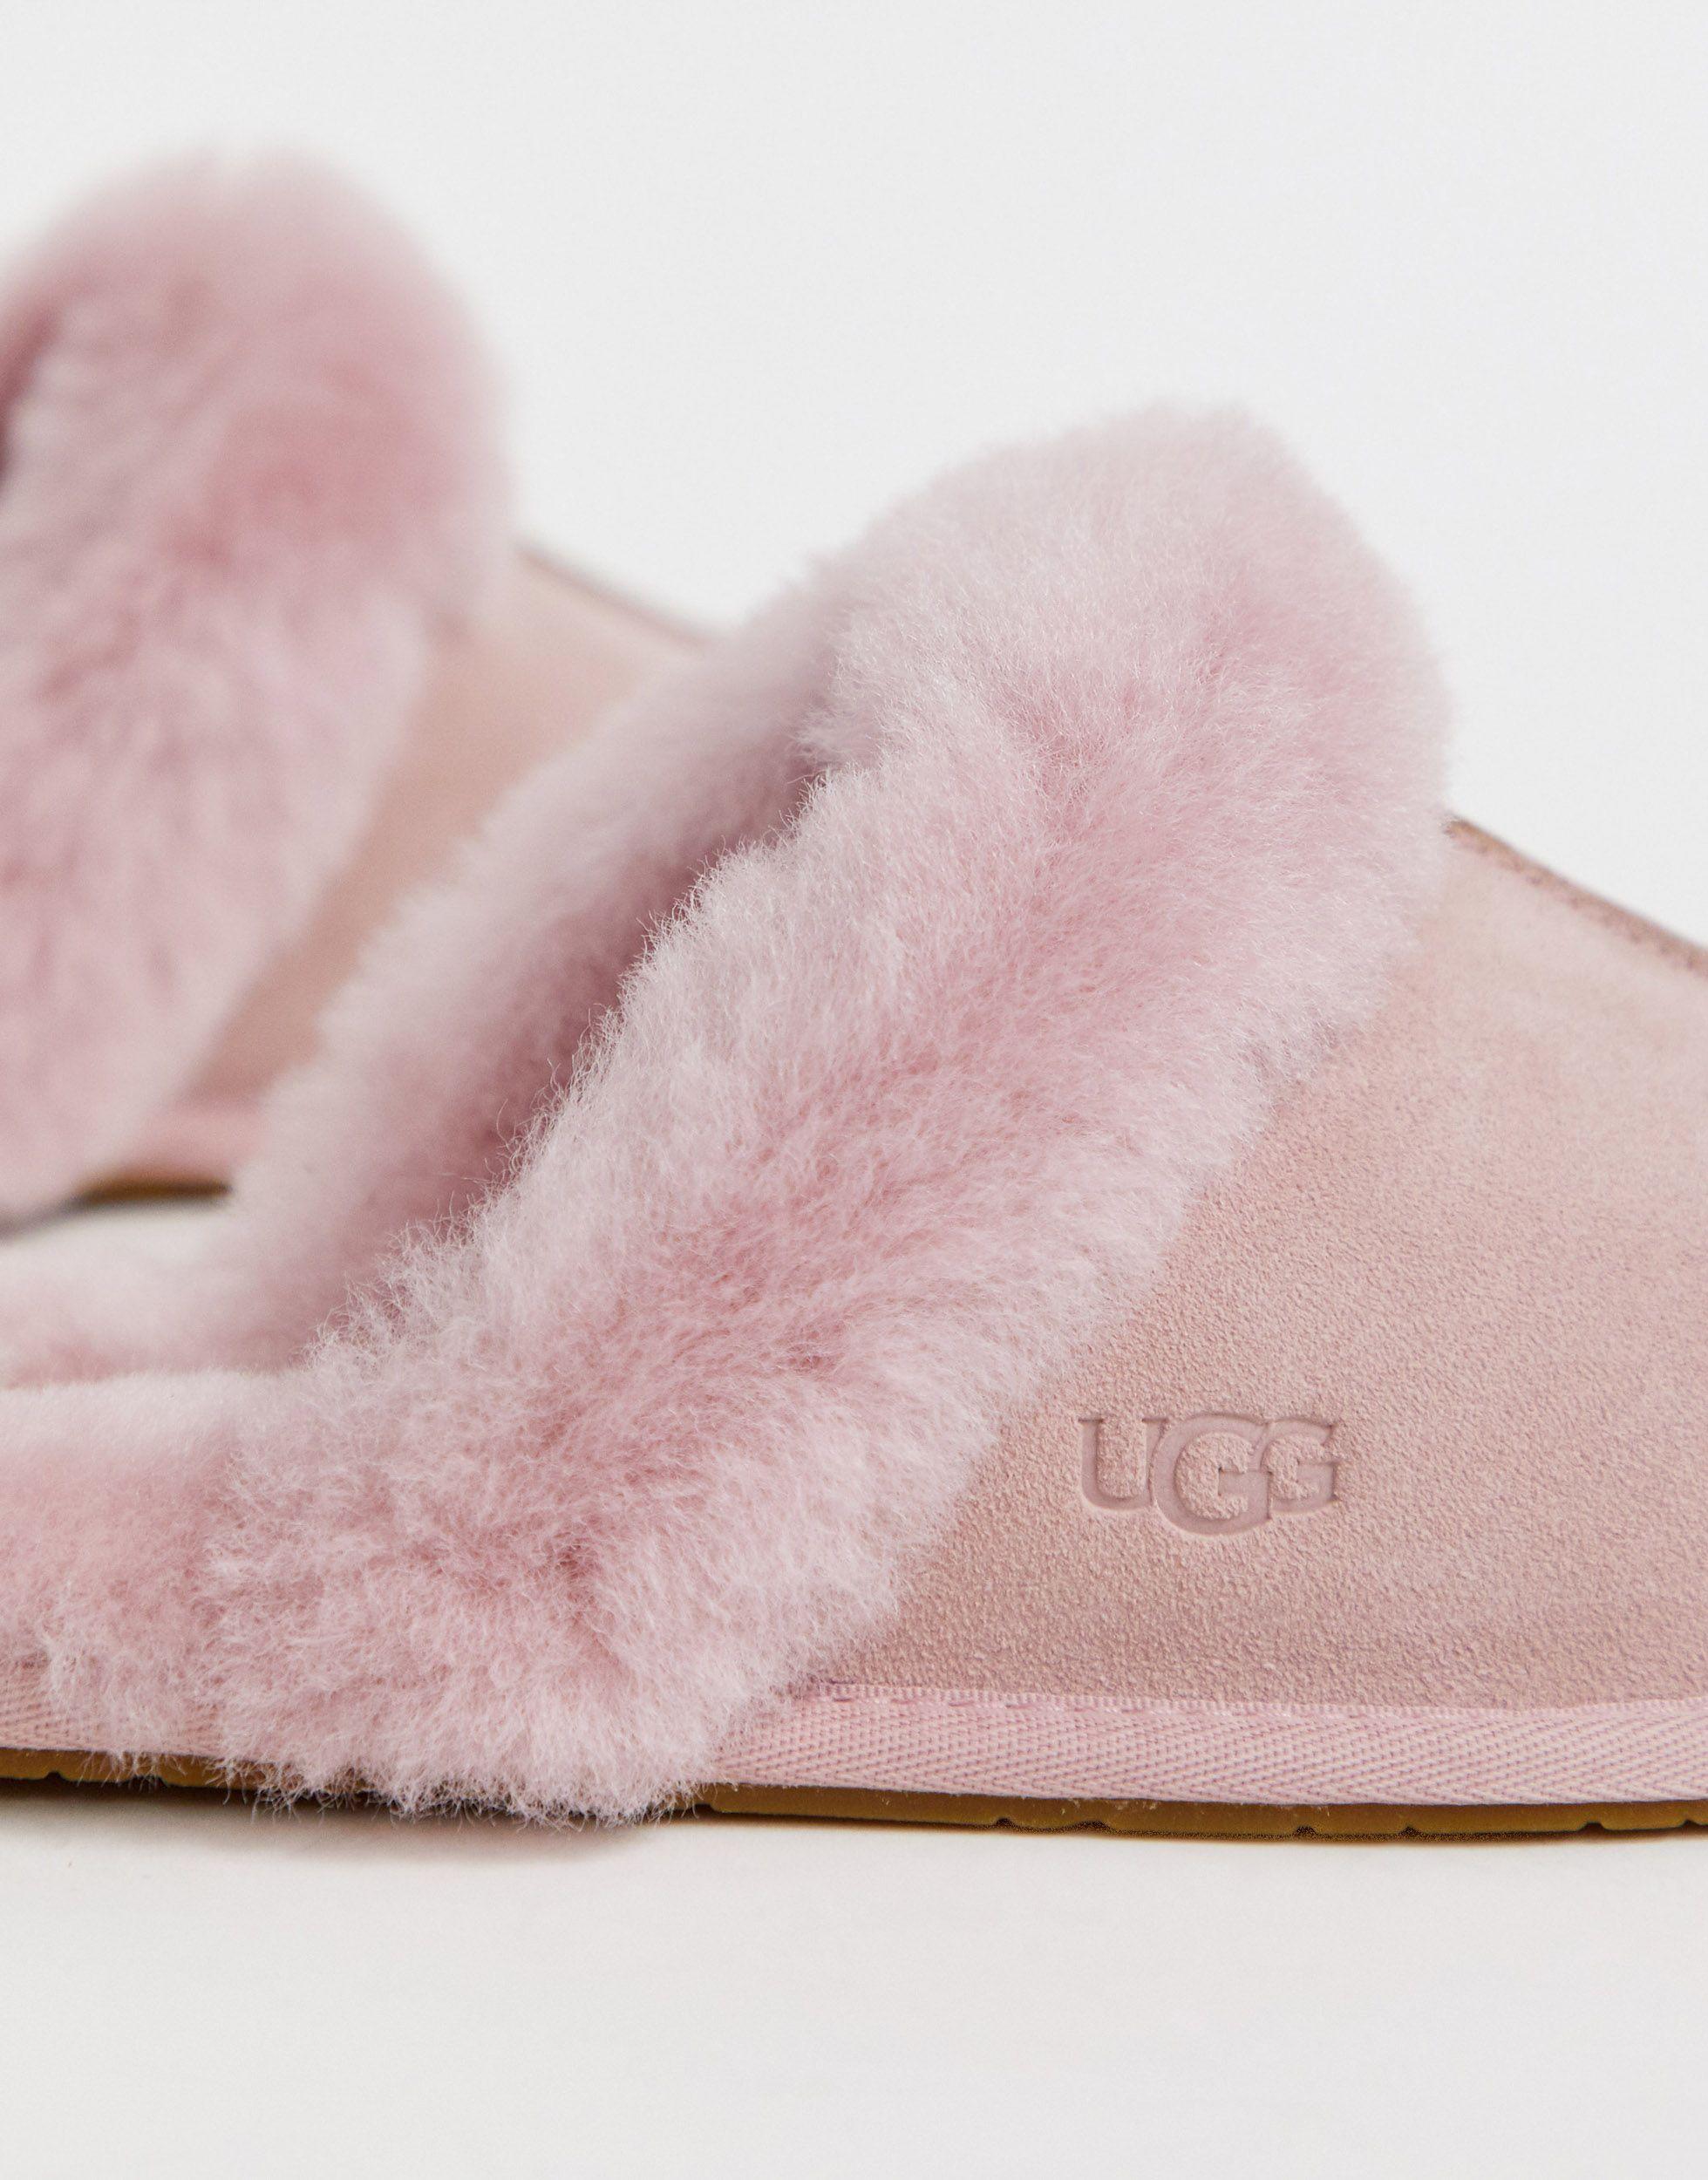 pink leopard ugg slippers